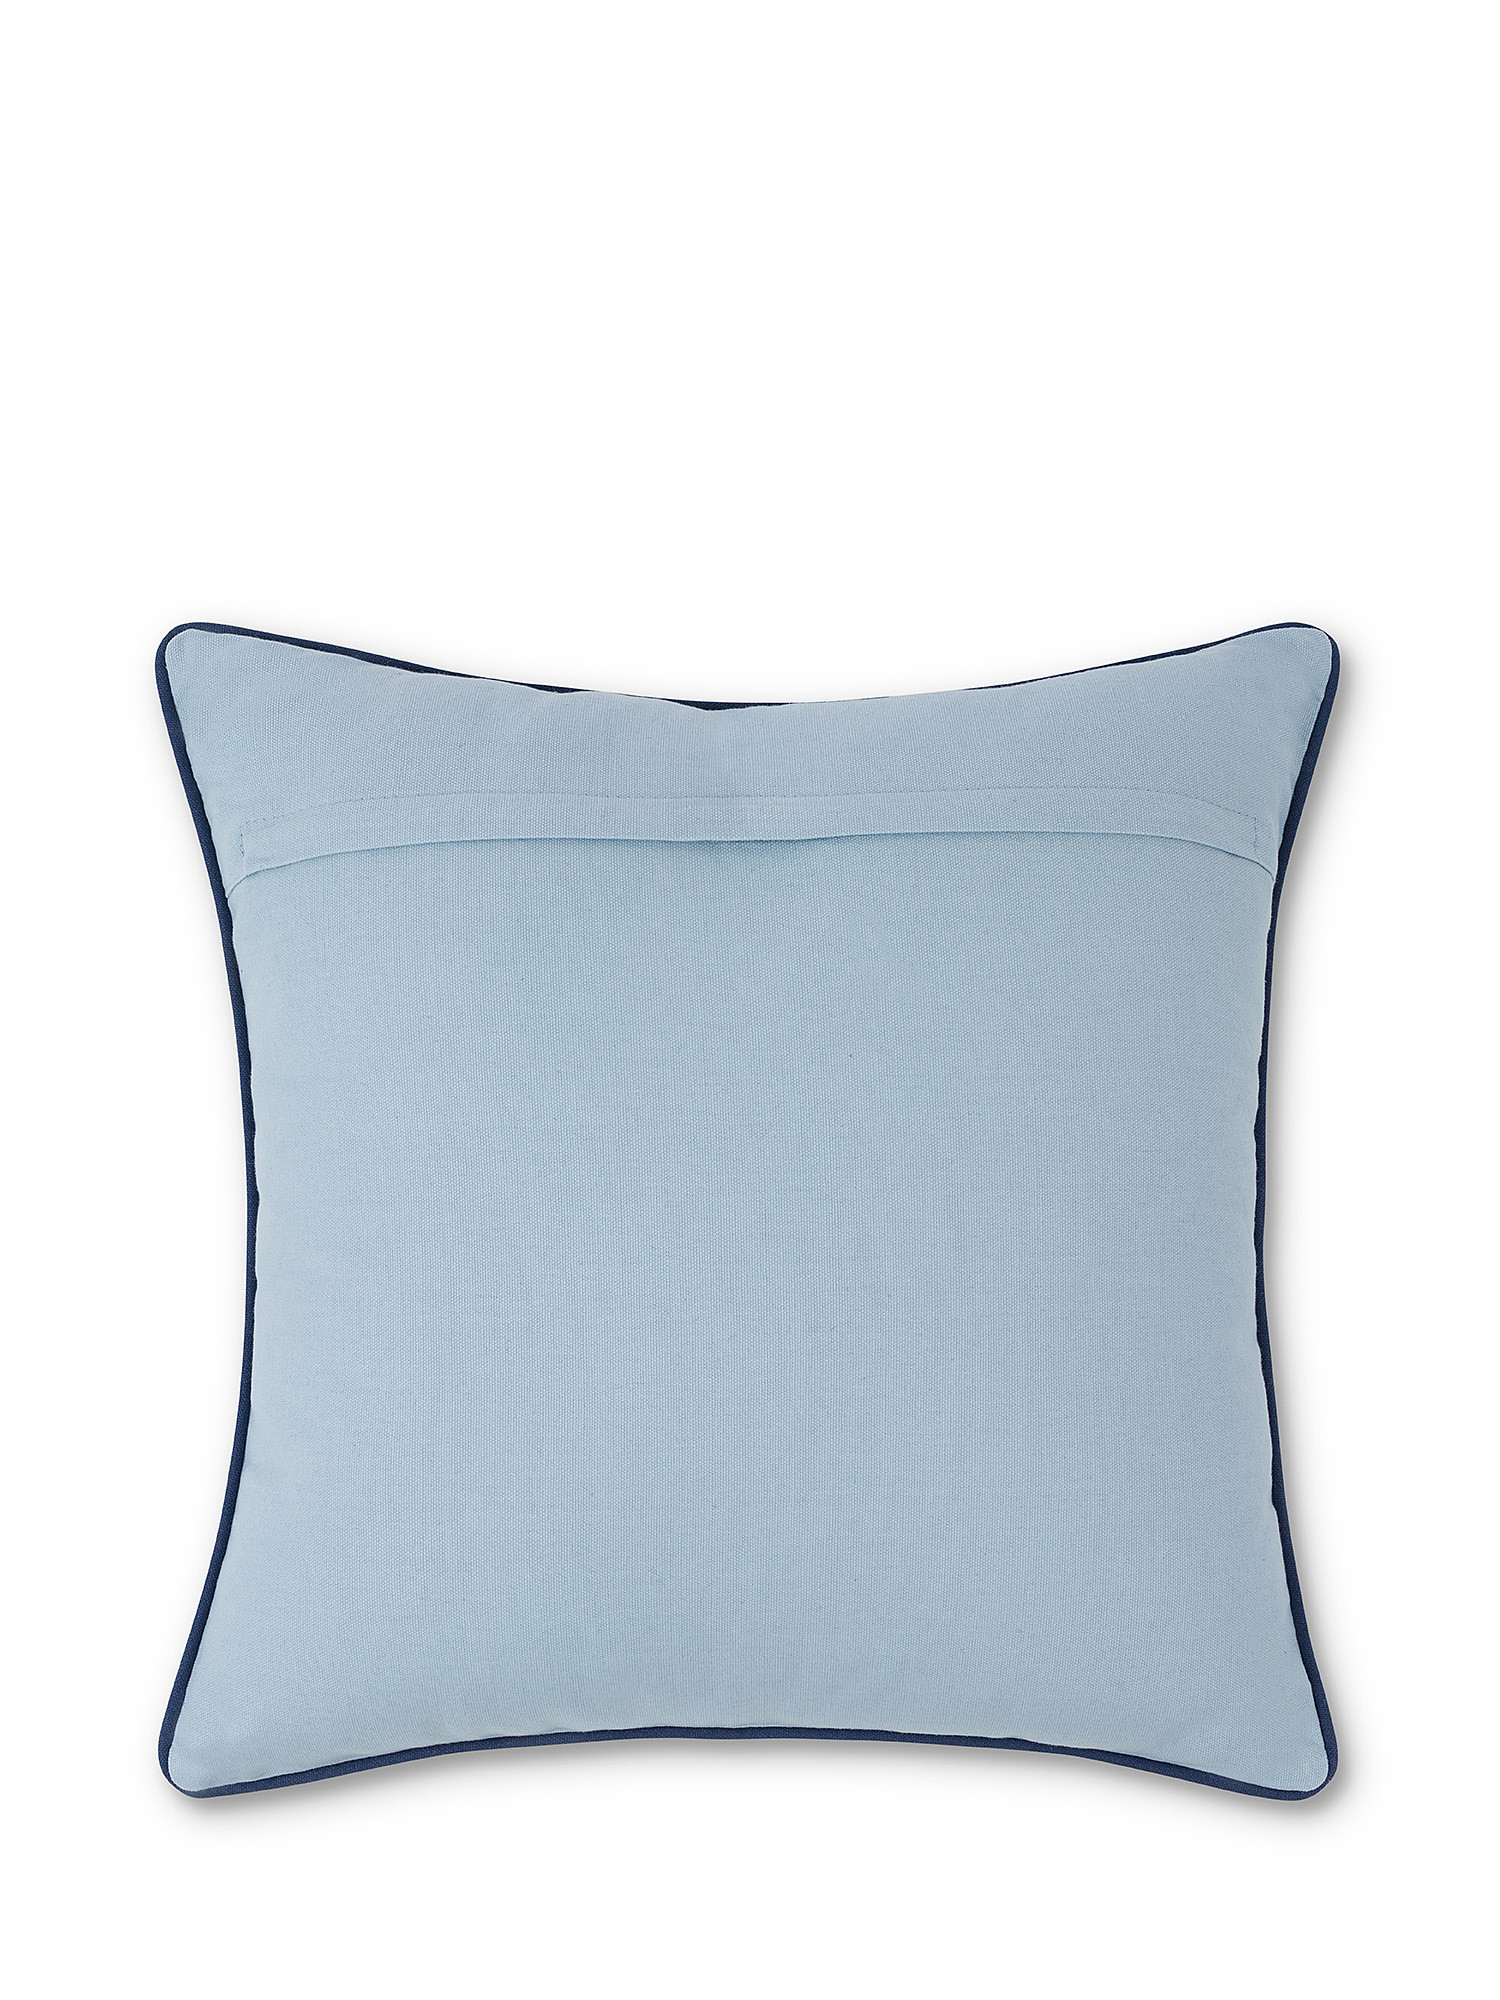 Marine embroidery cotton cushion 45x45cm, Light Blue, large image number 1